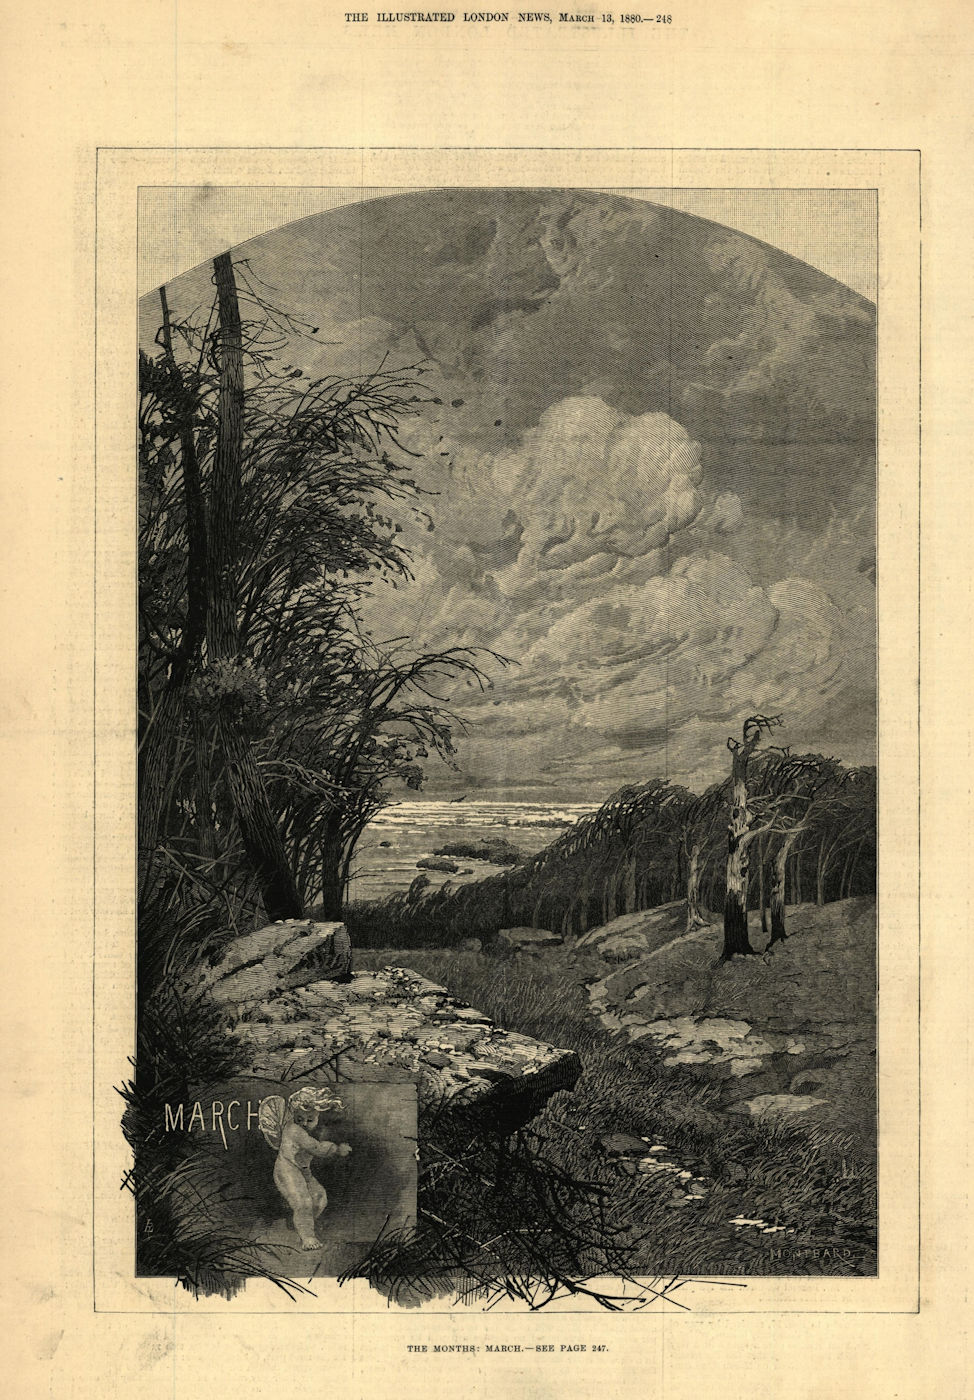 Associate Product The month: March. Landscapes. Fine arts 1880 old antique vintage print picture